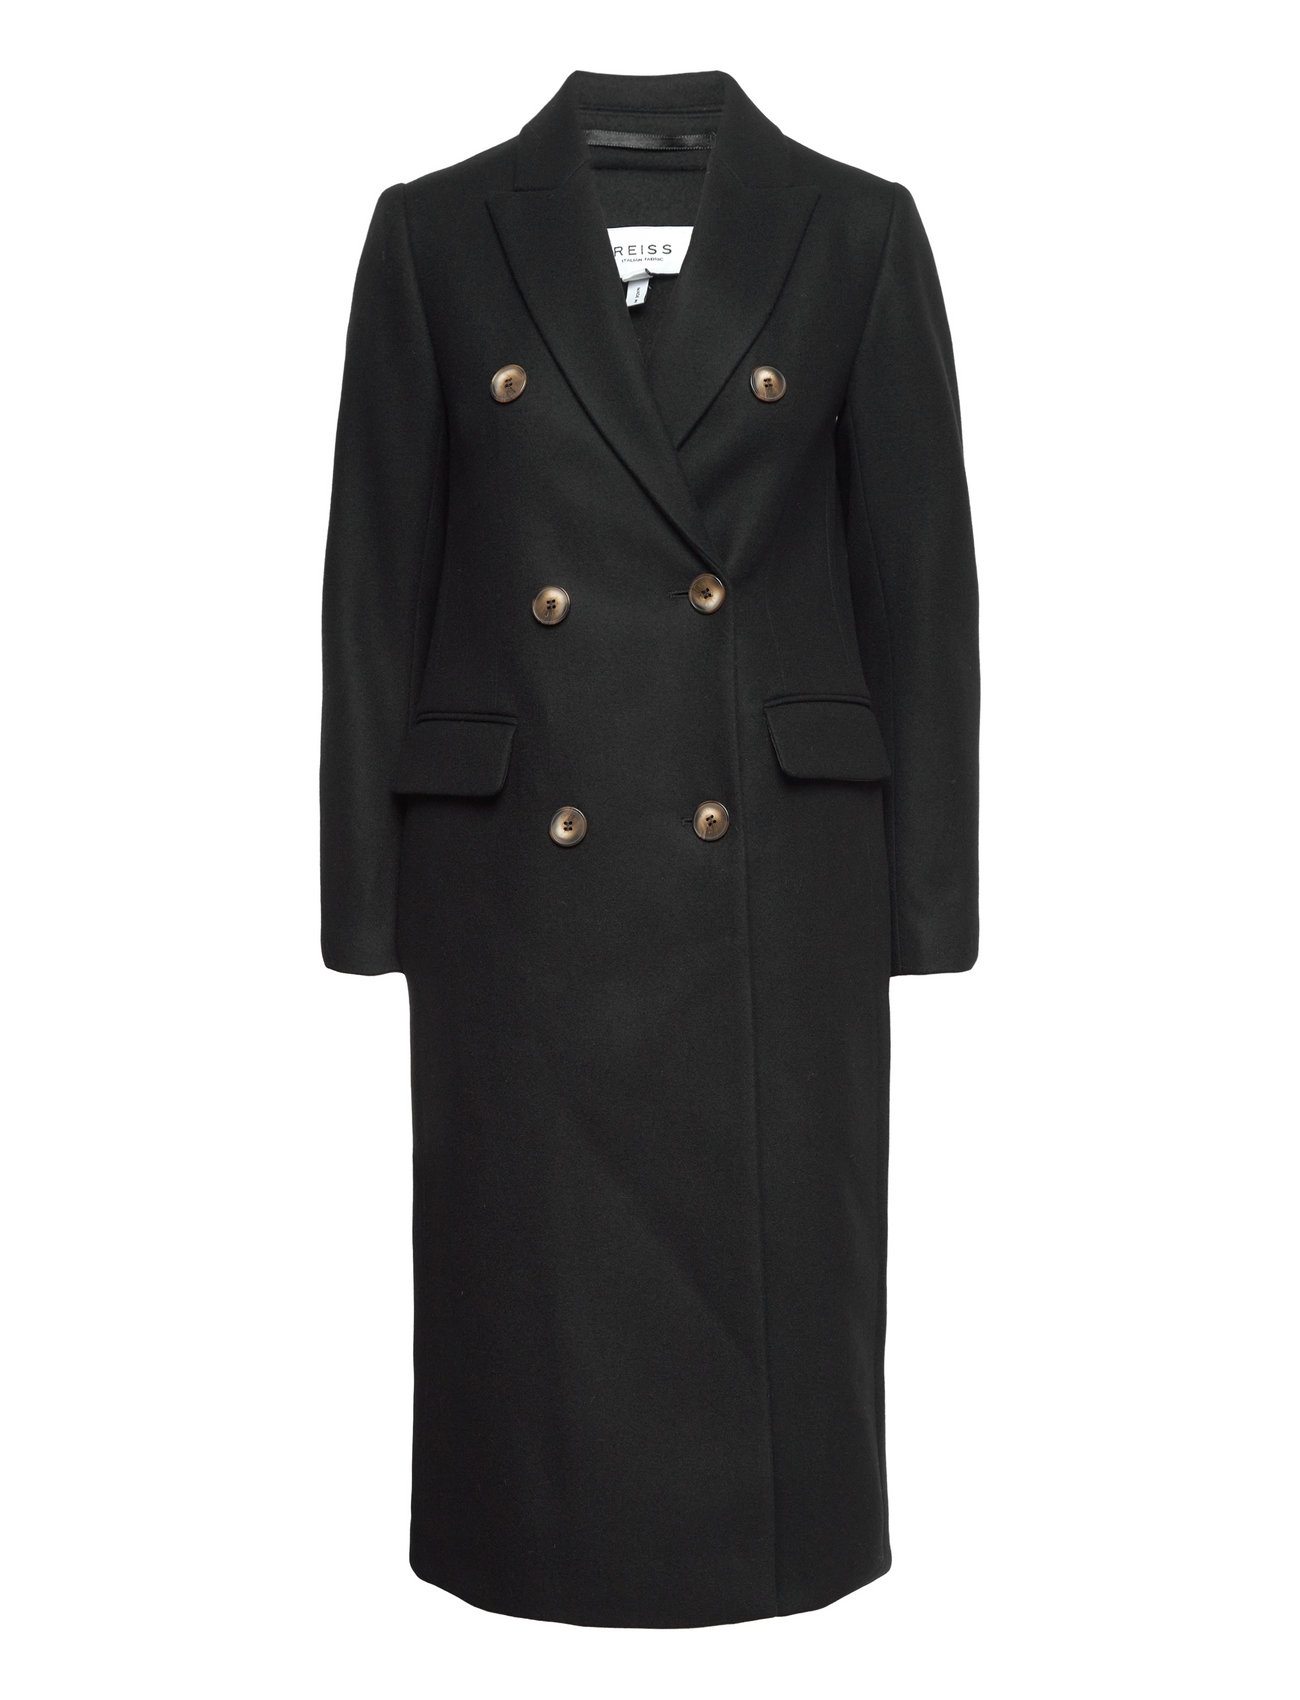 Reiss Darla - 570 €. Buy Winter Coats from Reiss online at Boozt.com ...